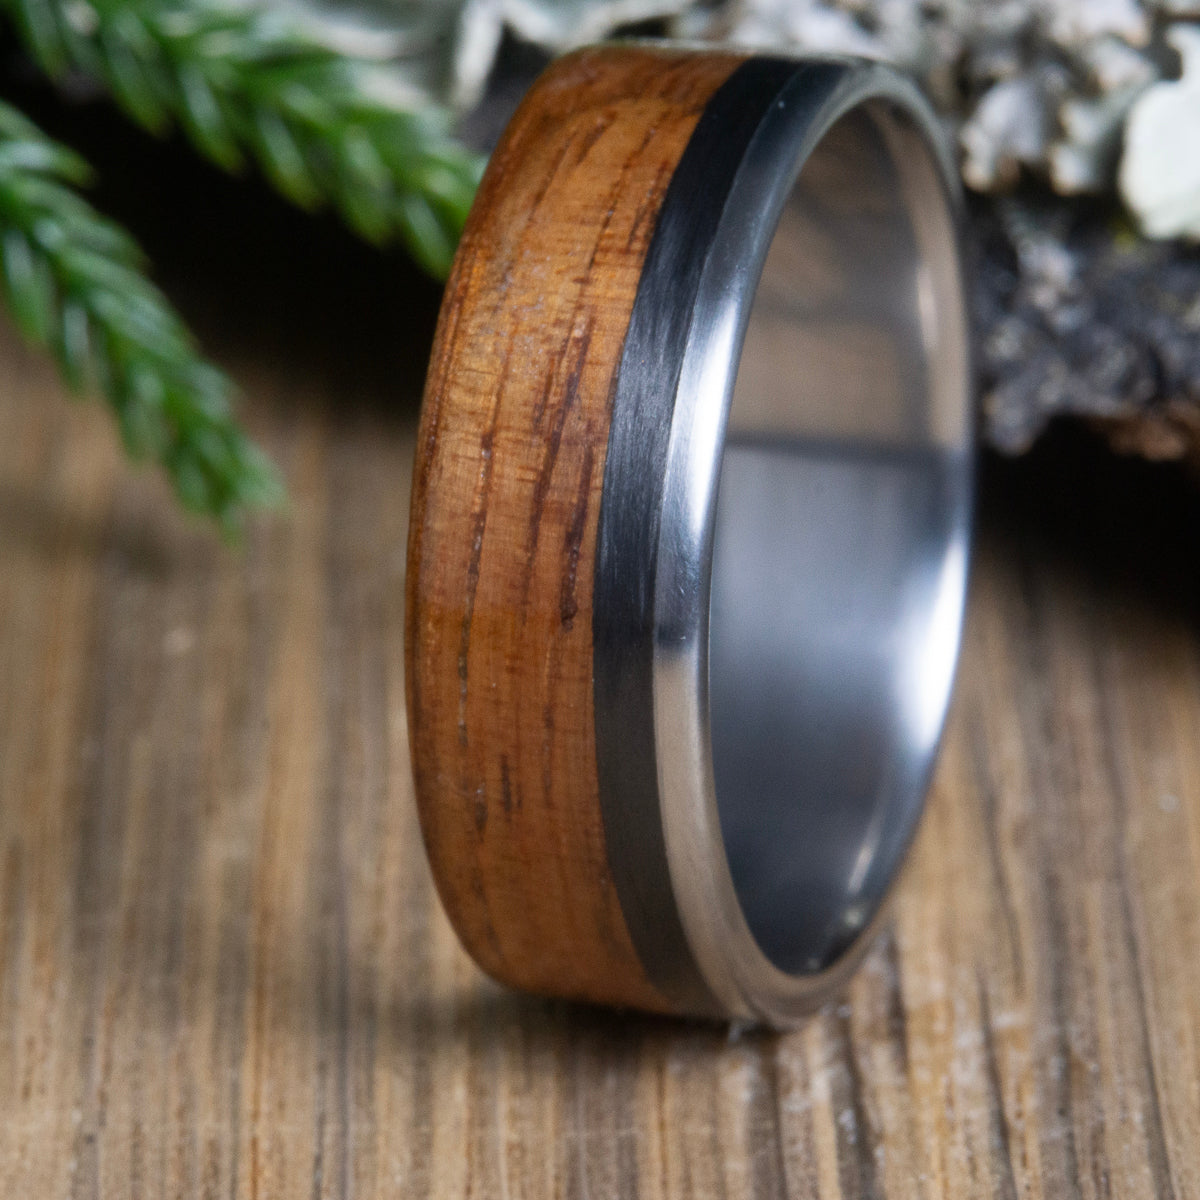 Koa wood ring, carbon fiber and wooden inlay